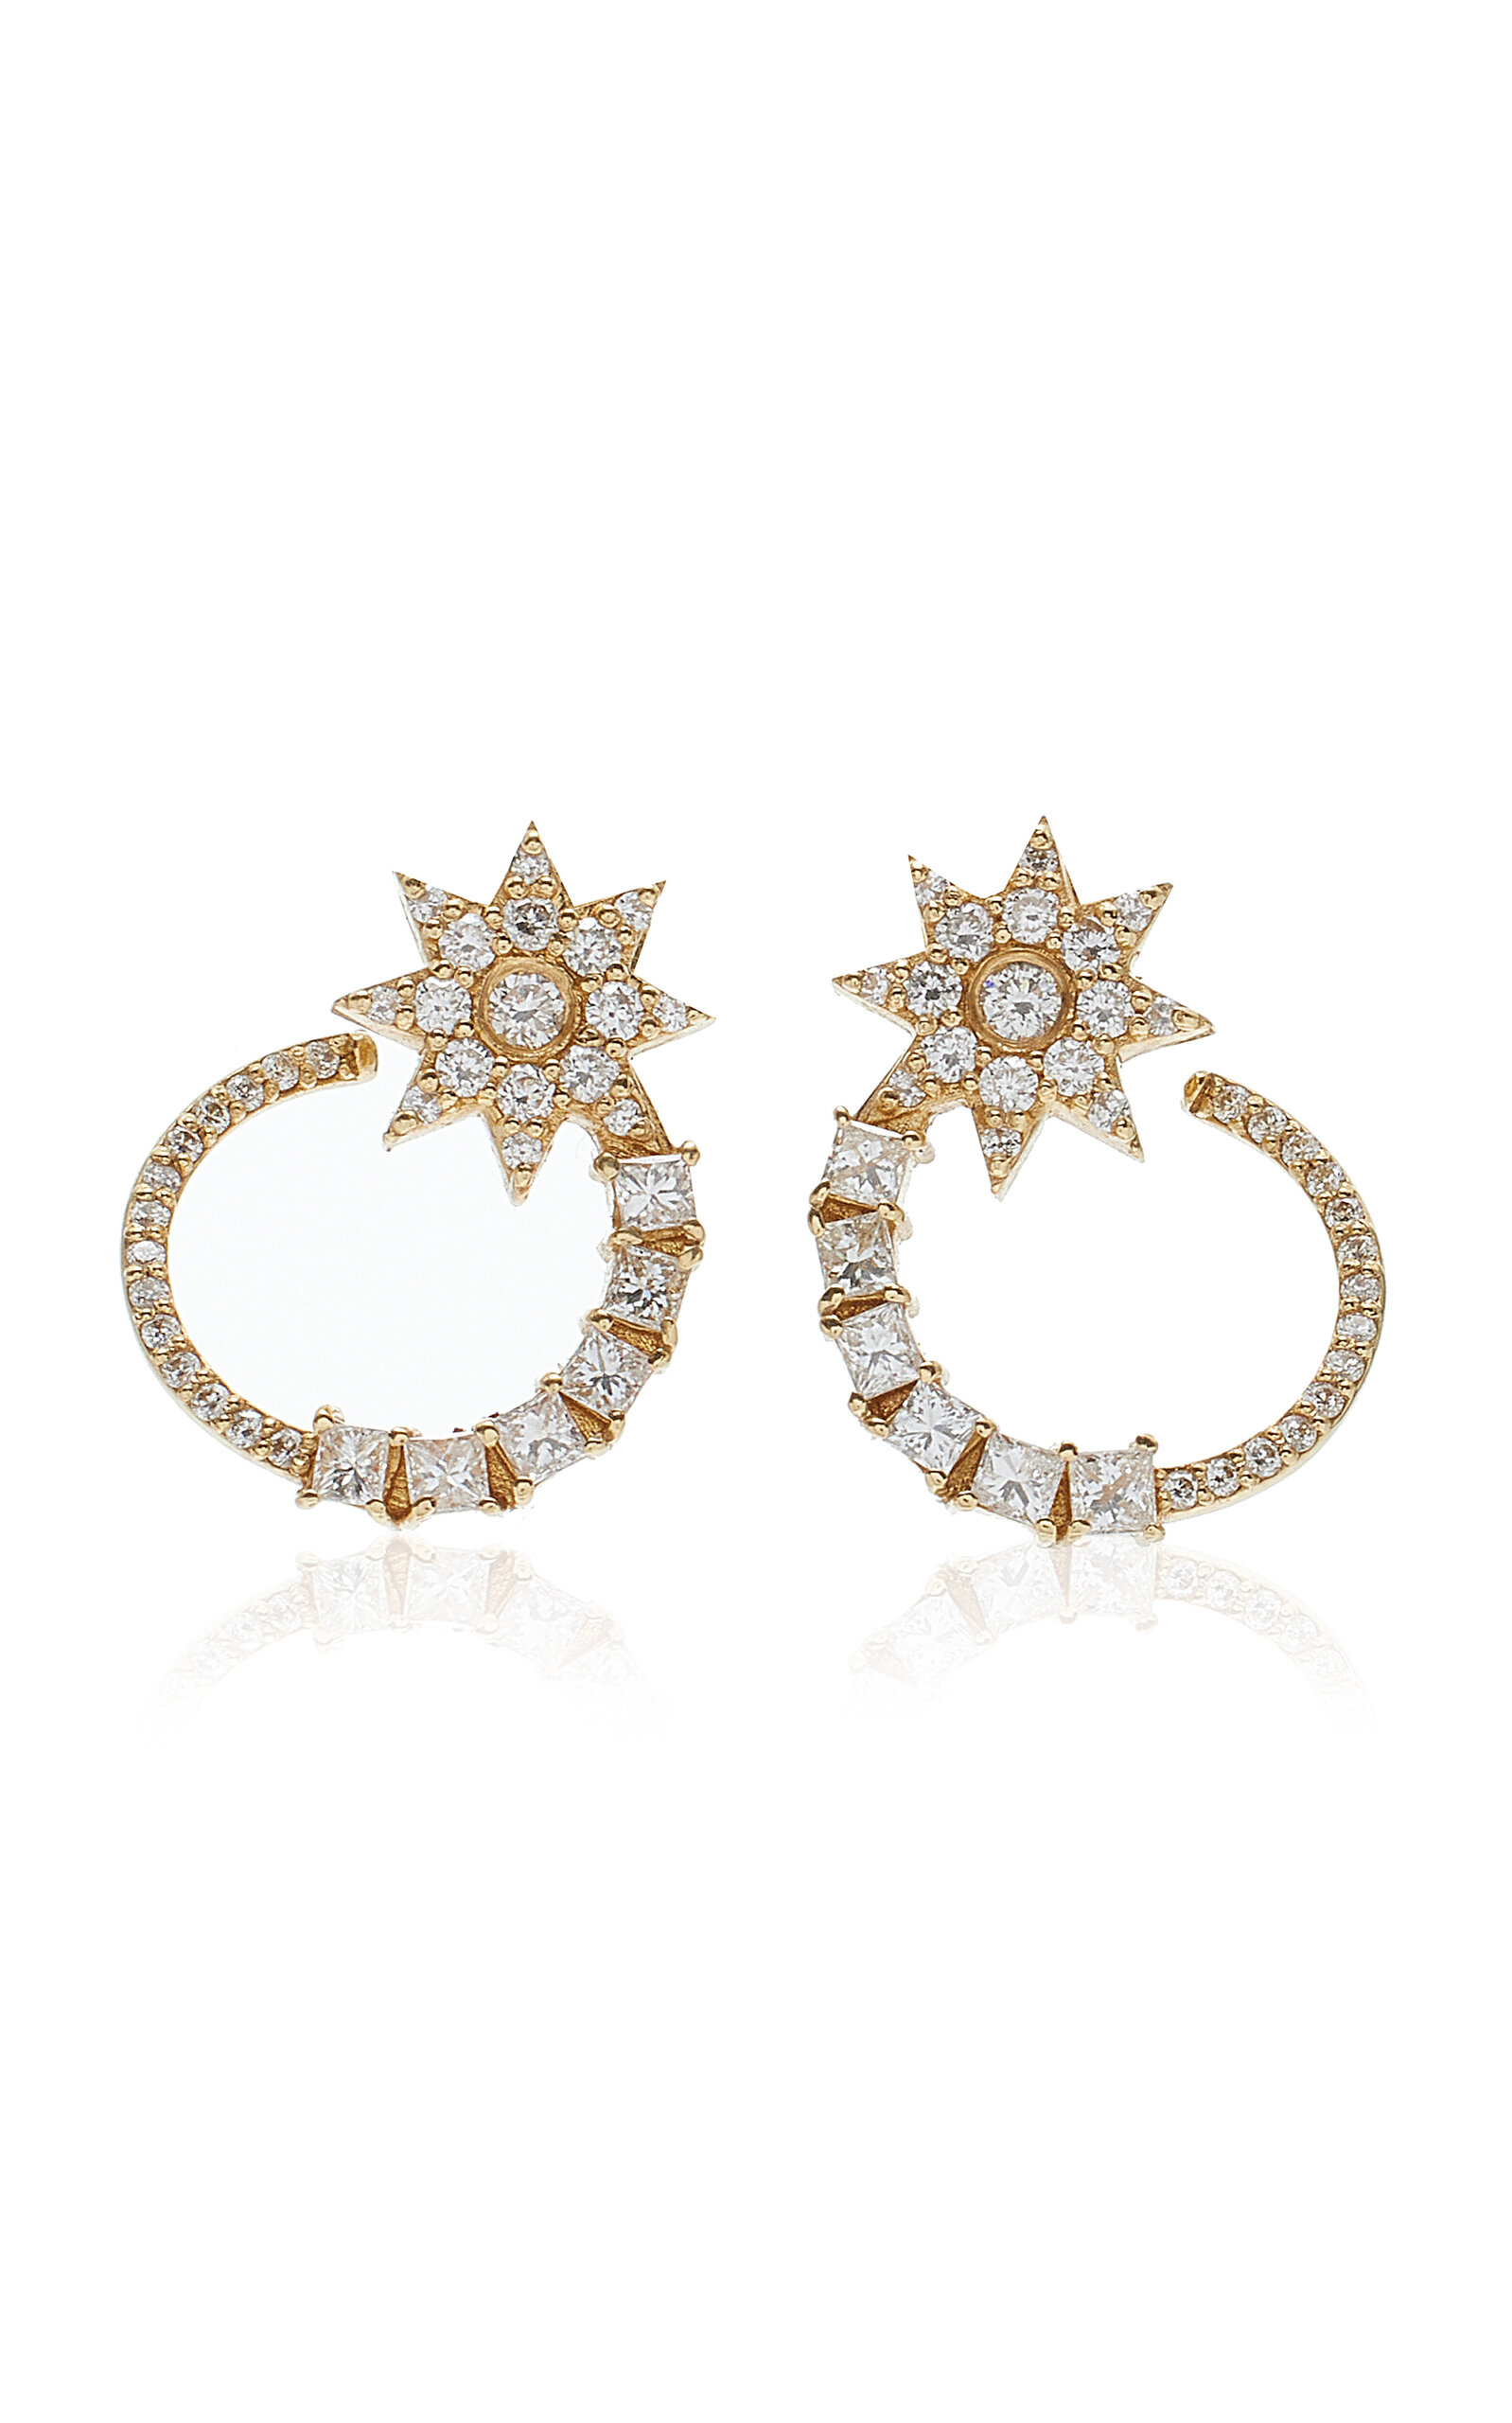 Colette Jewelry Shooting Star 18k Yellow Gold Diamond Earrings